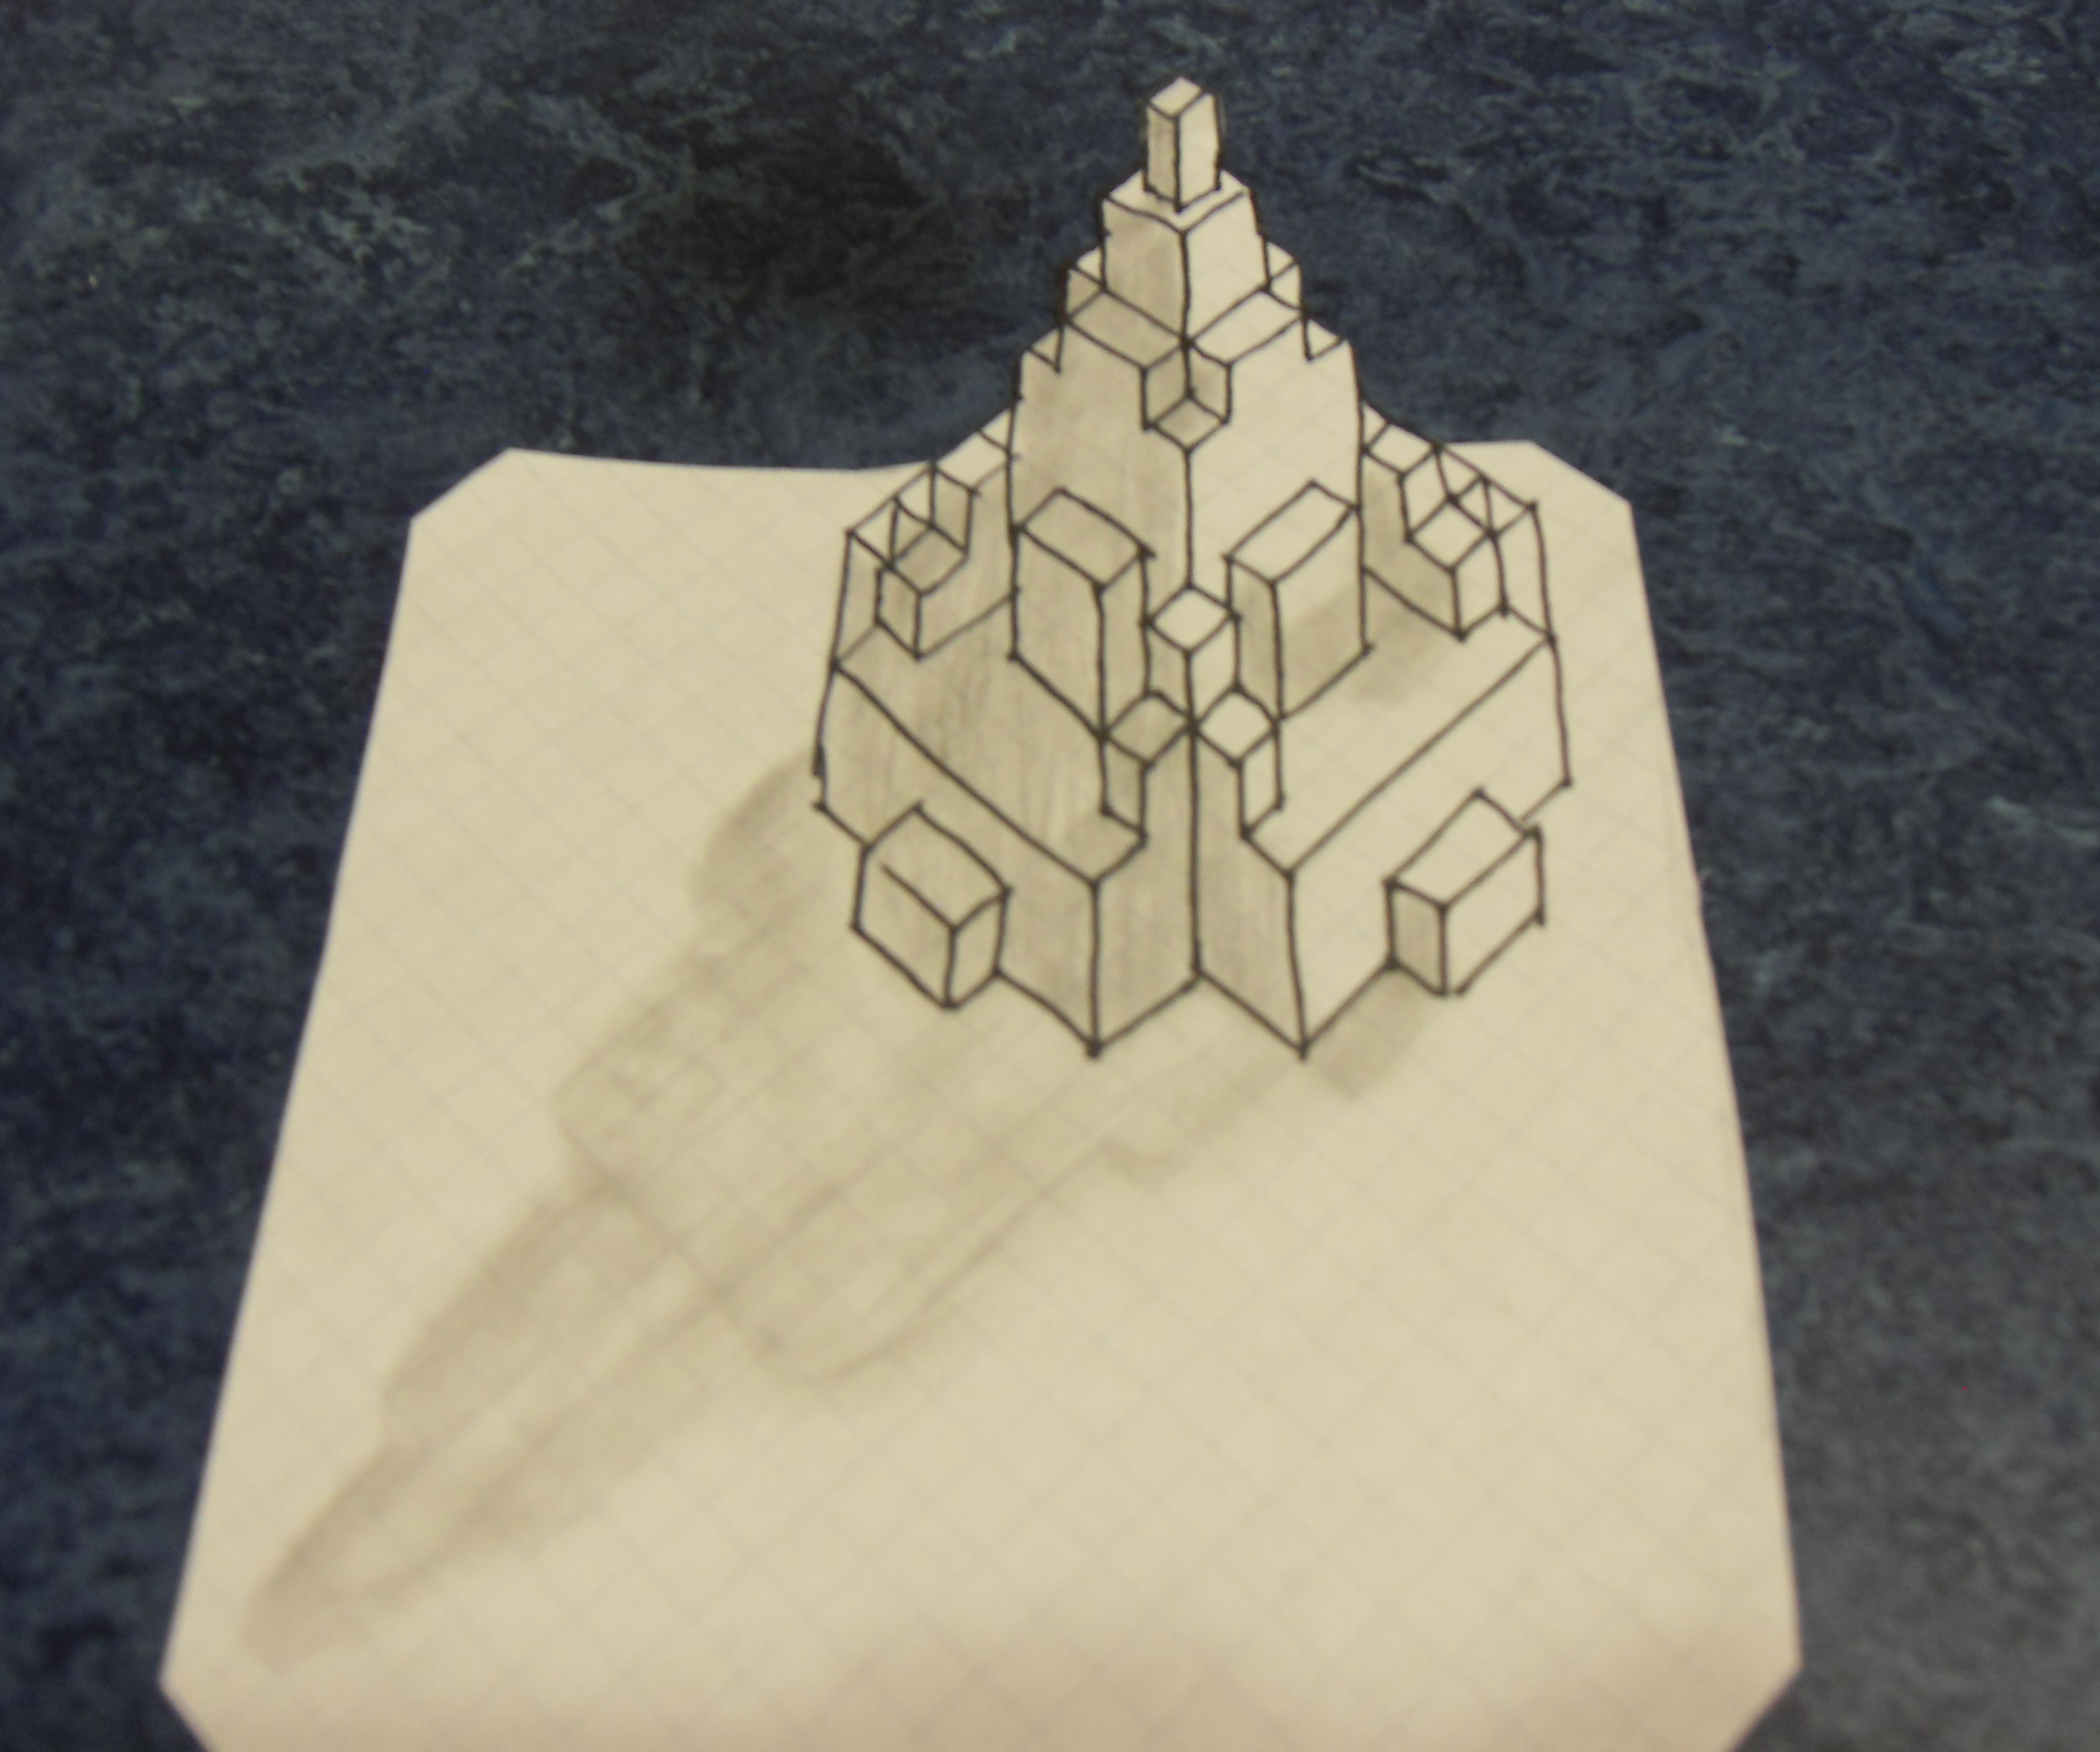 3D Buildings on grid paper!